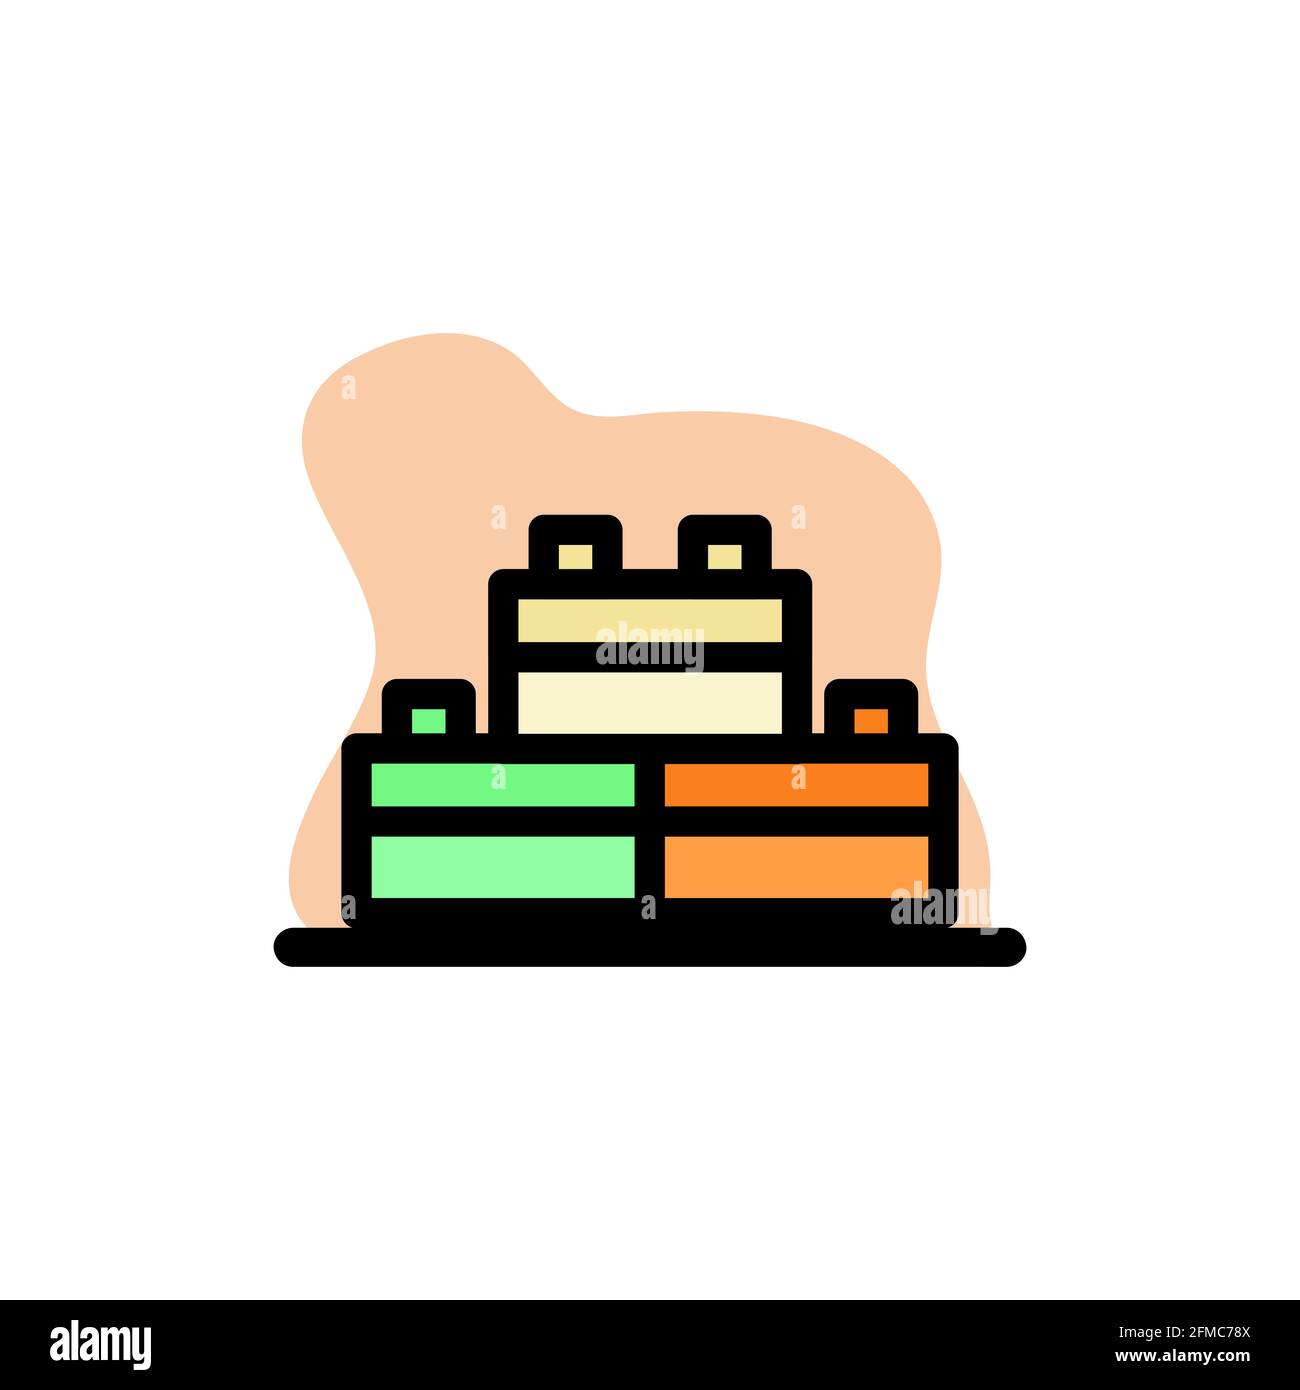 Lego Brick Conceptual Vector Icon Design Illustration eps10 Stock Vector